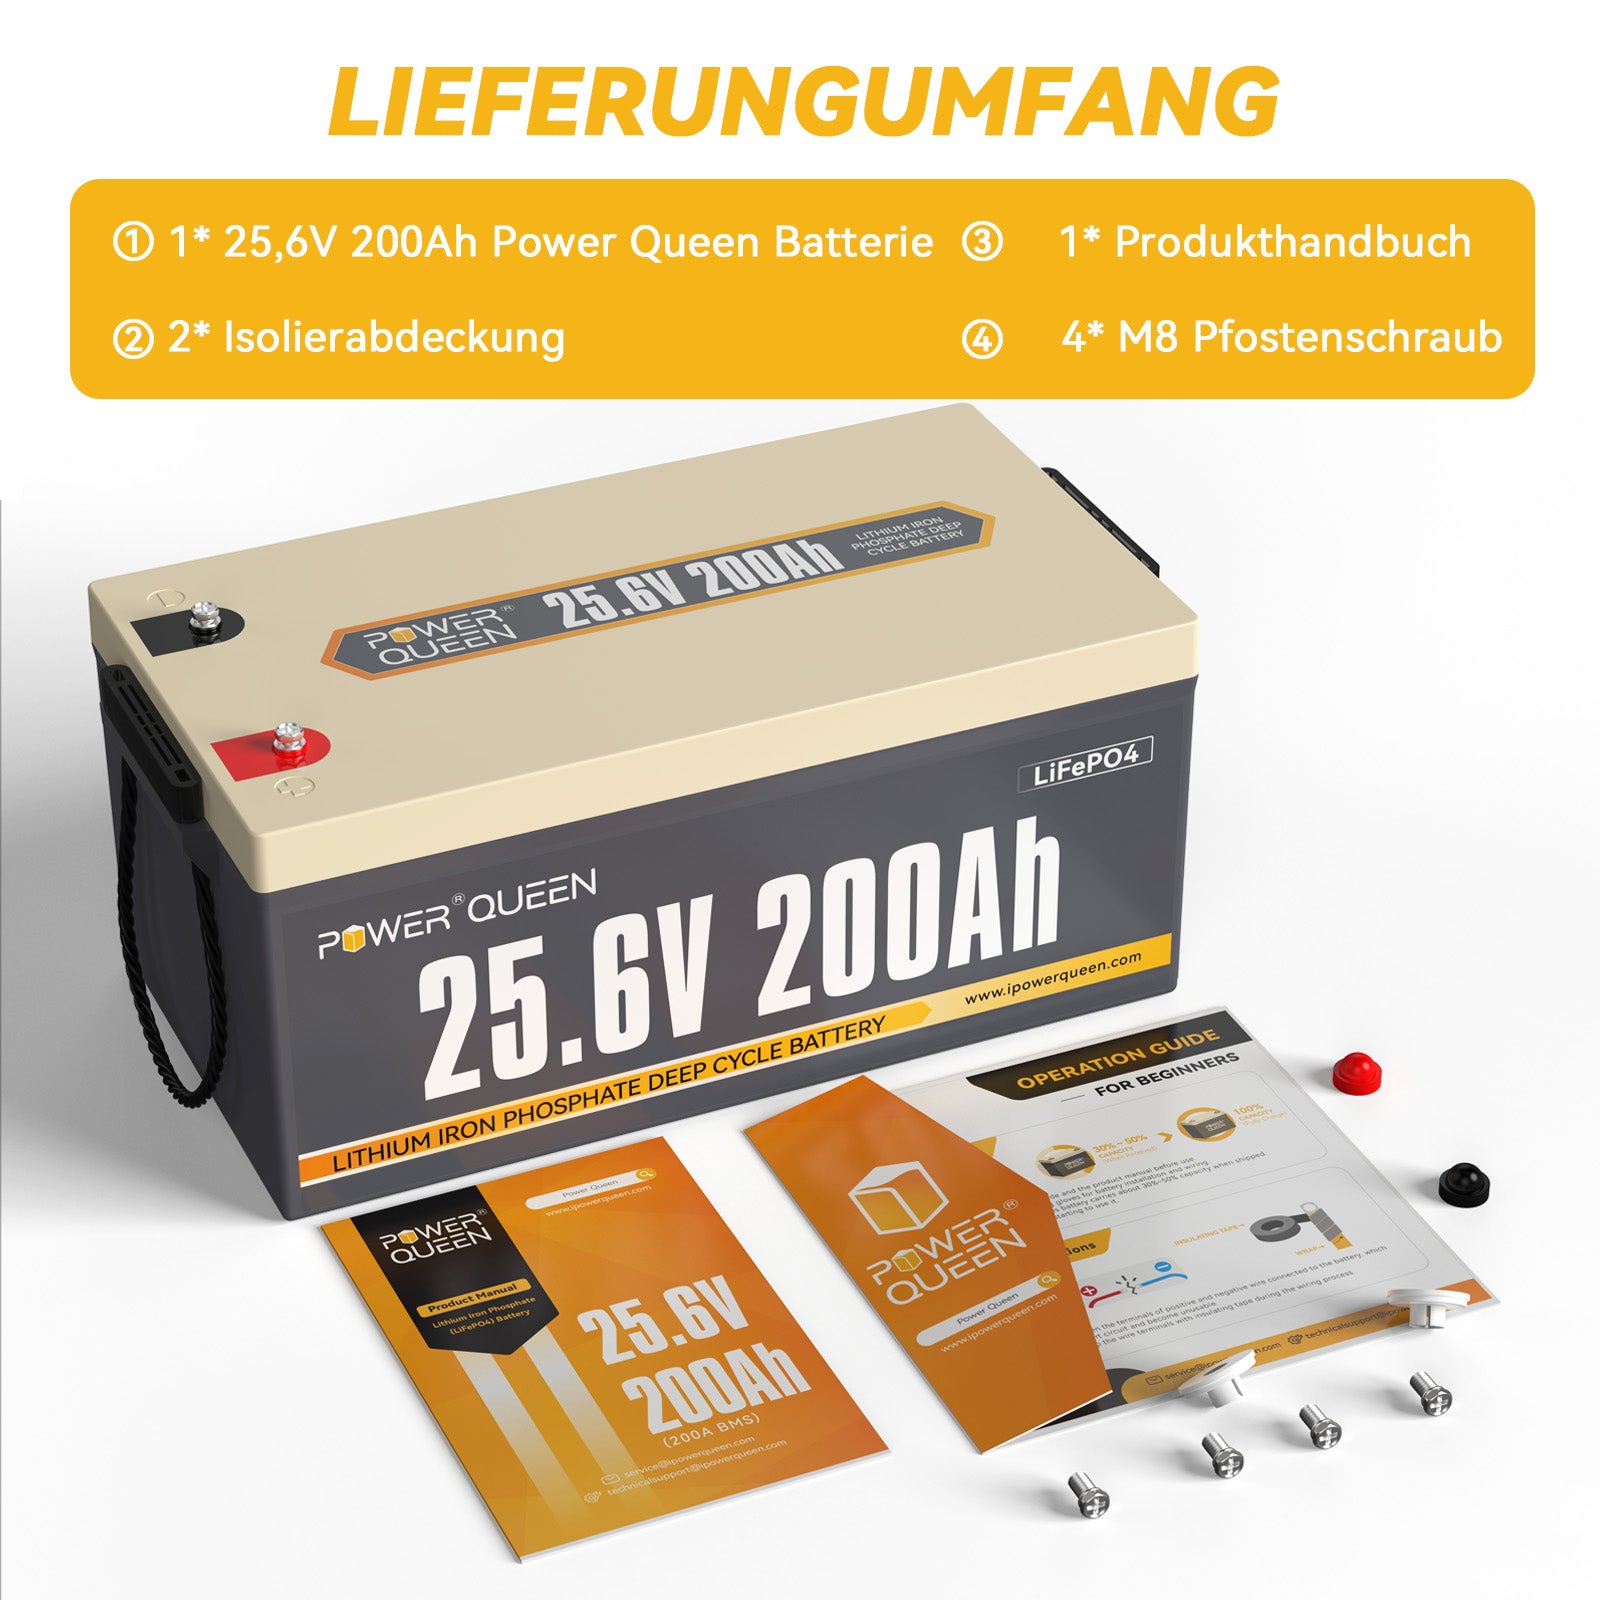 【TVA 0%】 Batterie Power Queen 25,6 V 200 Ah LiFePO4, BMS 200 A intégré